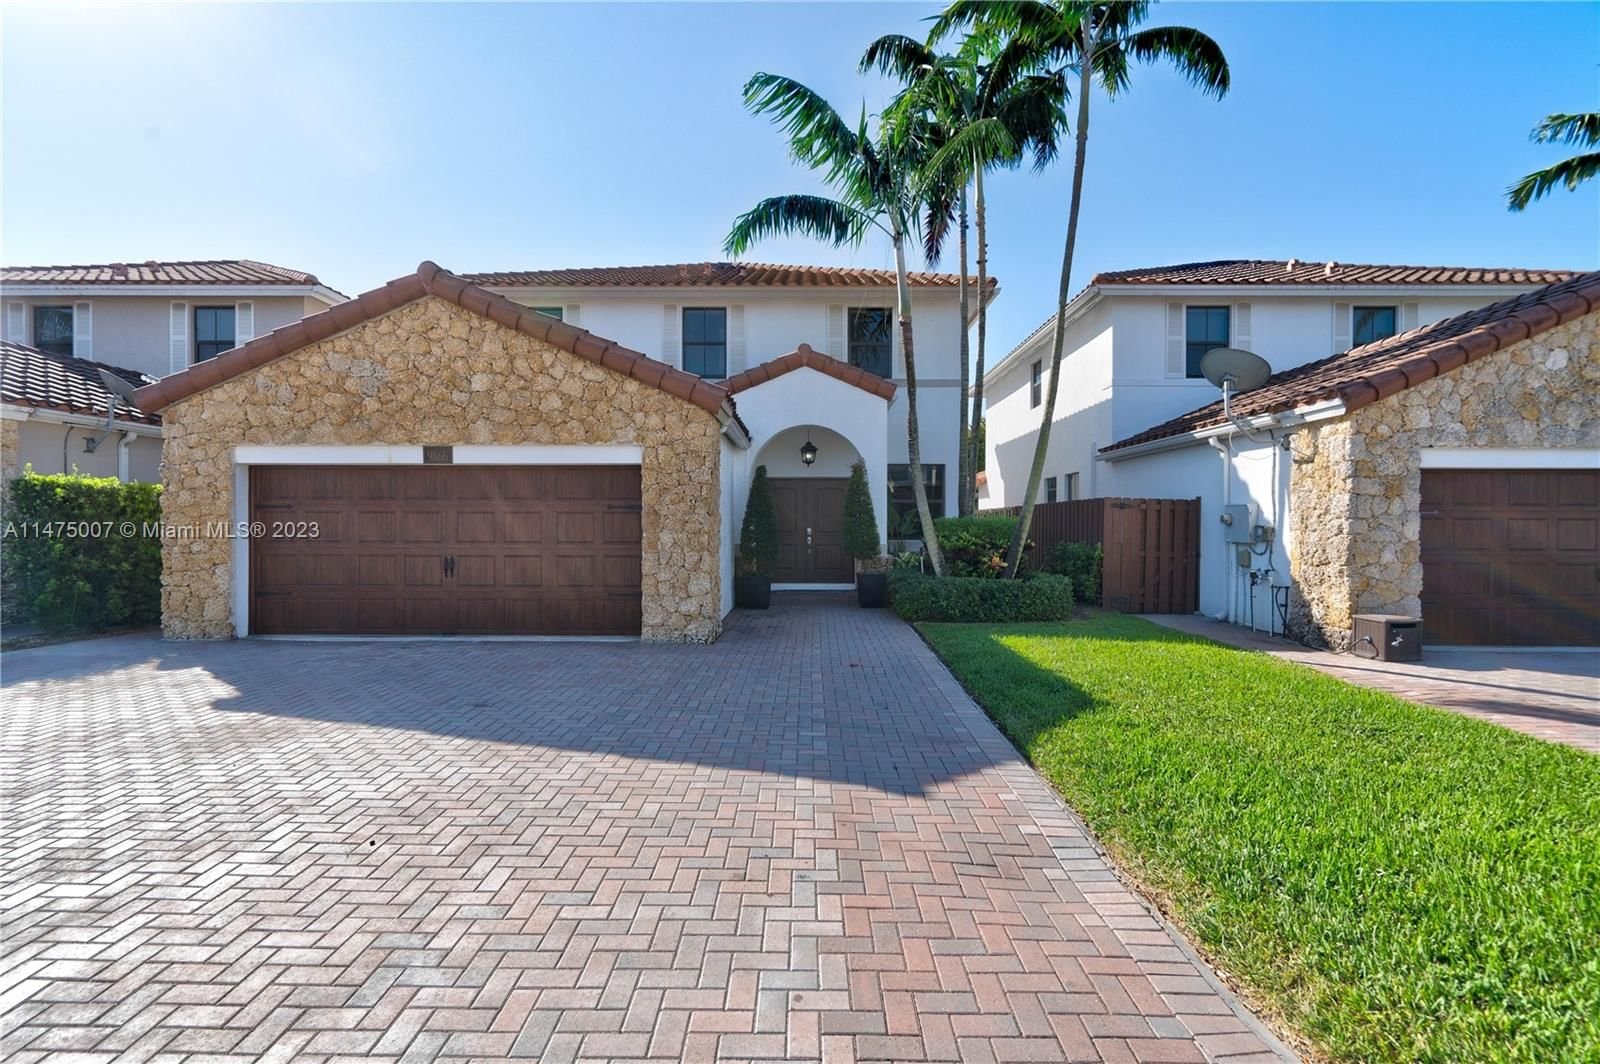 Real estate property located at 9866 10th St, Miami-Dade County, Miami, FL